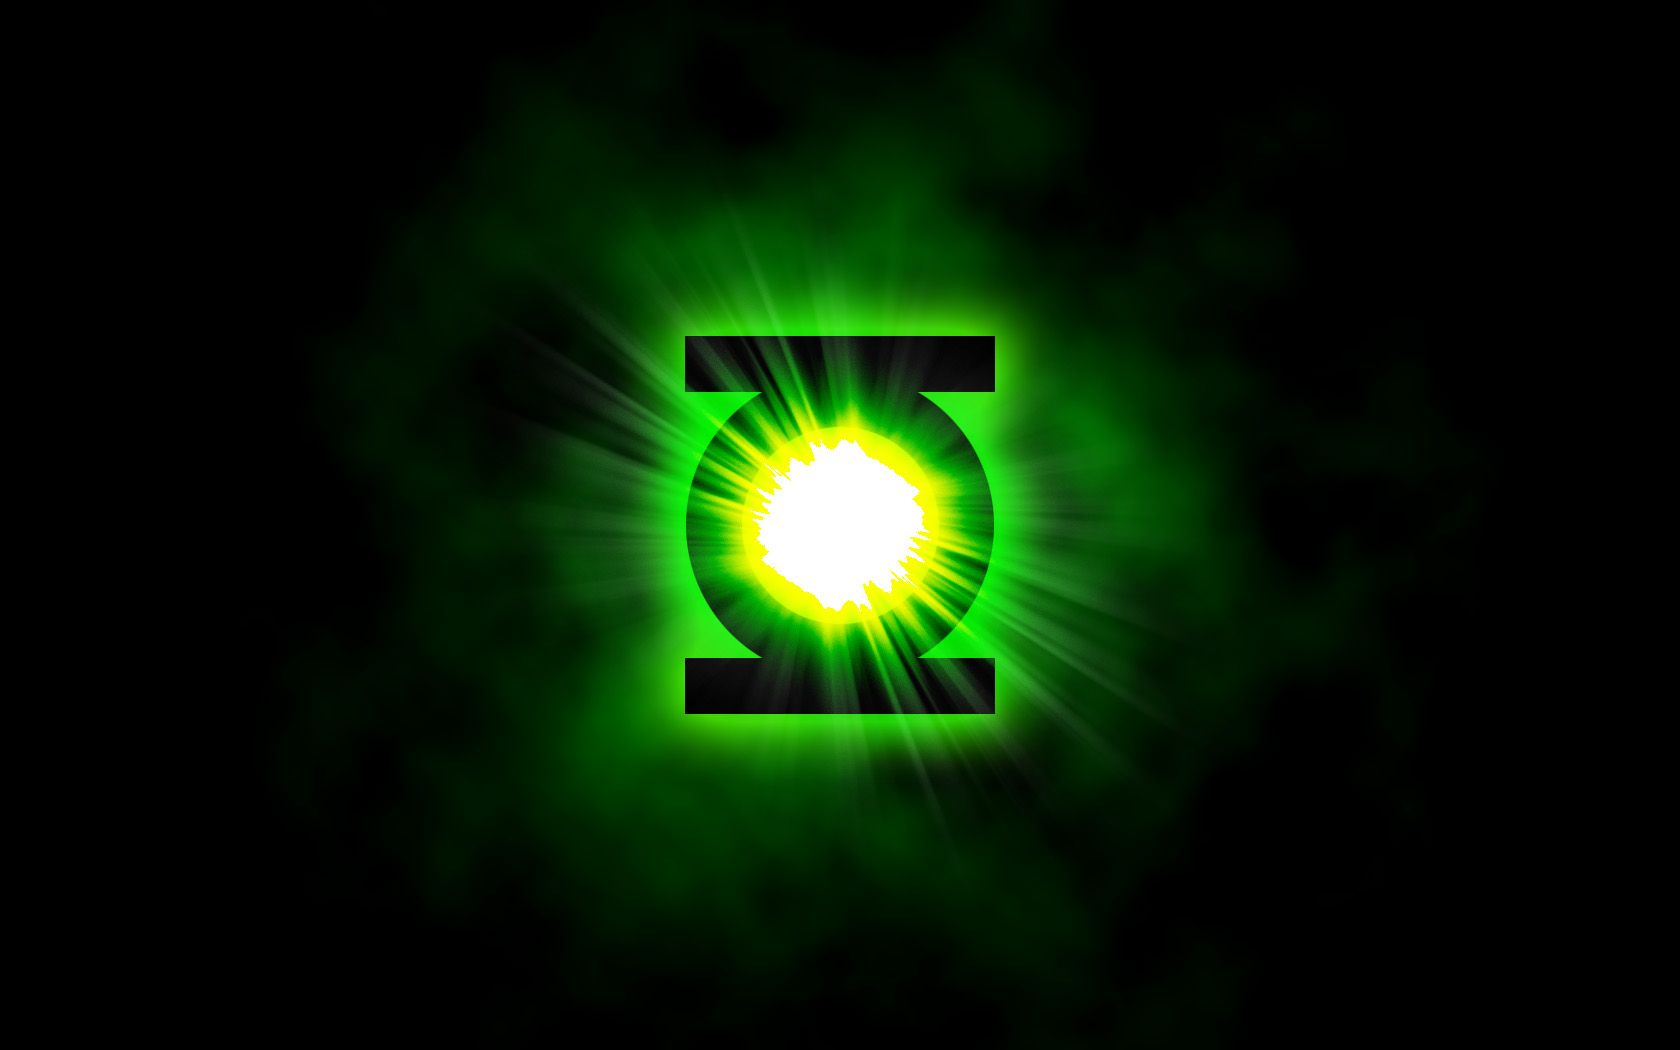 Green Lantern Wallpaper Screensaver